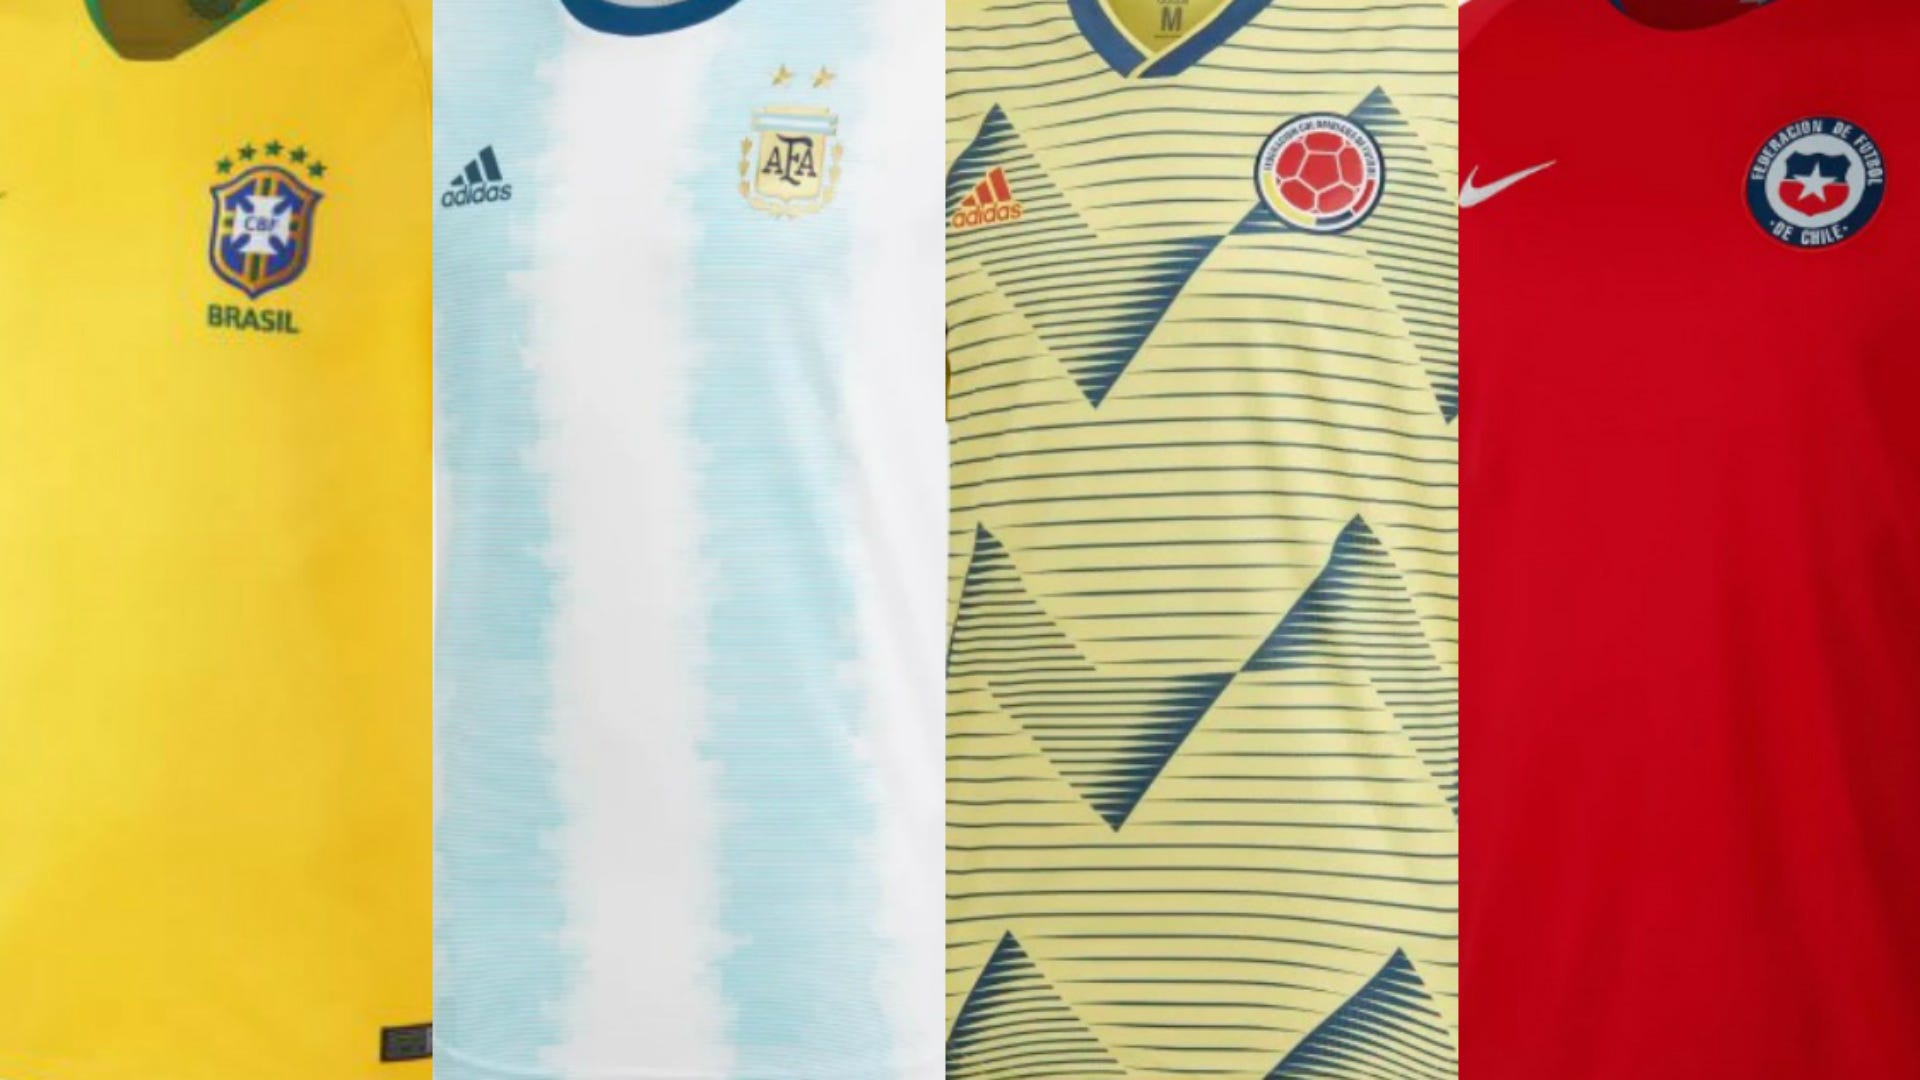 camisetas titulares y alternativas de la Copa América 2019 | Goal.com Espana